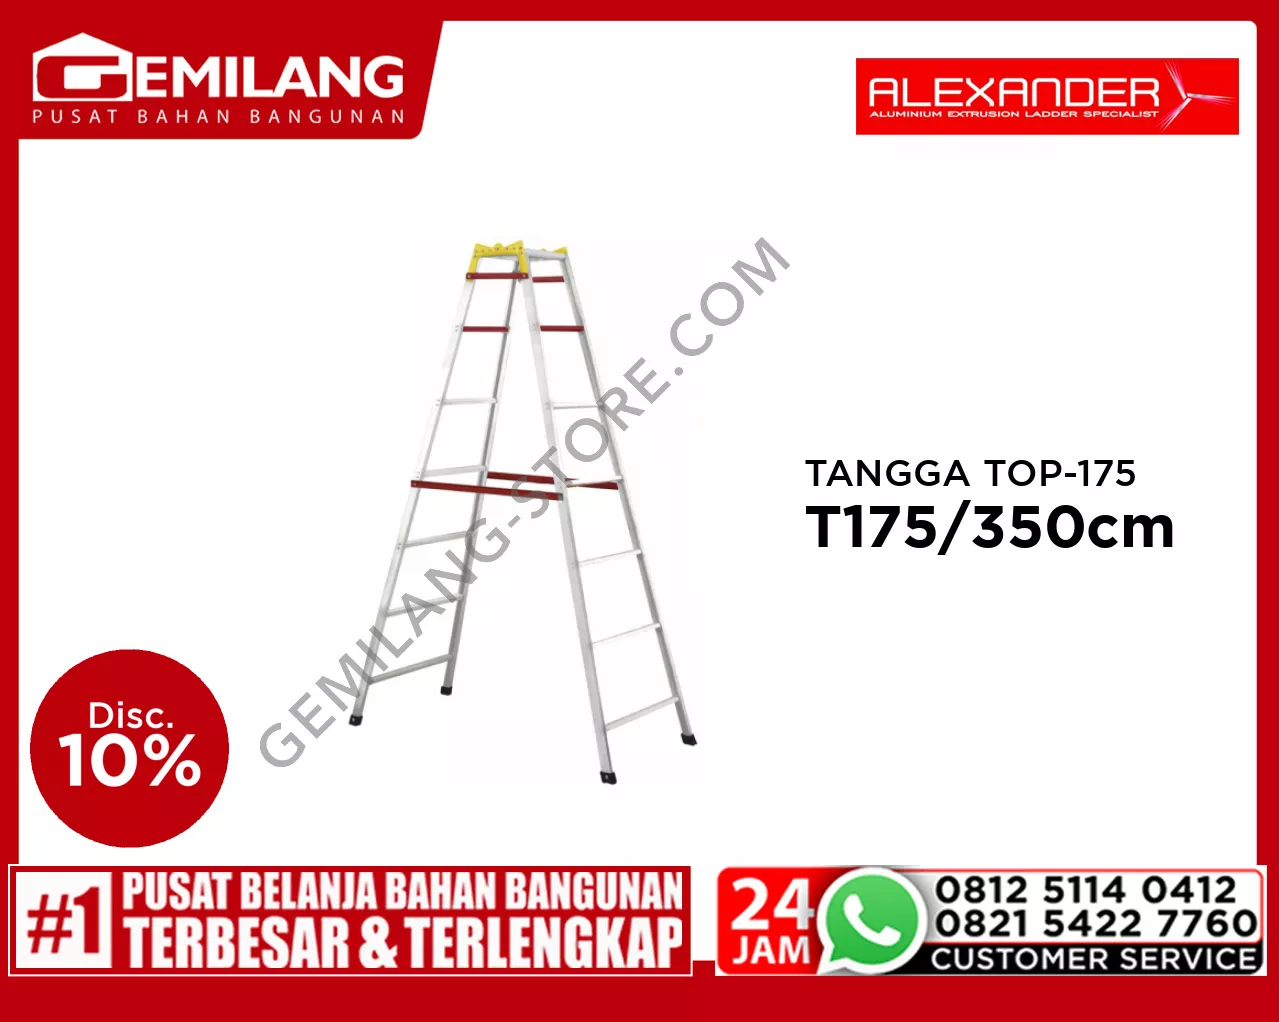 ALEXANDER TANGGA TOP-175 STEPS 6 T175/350cm